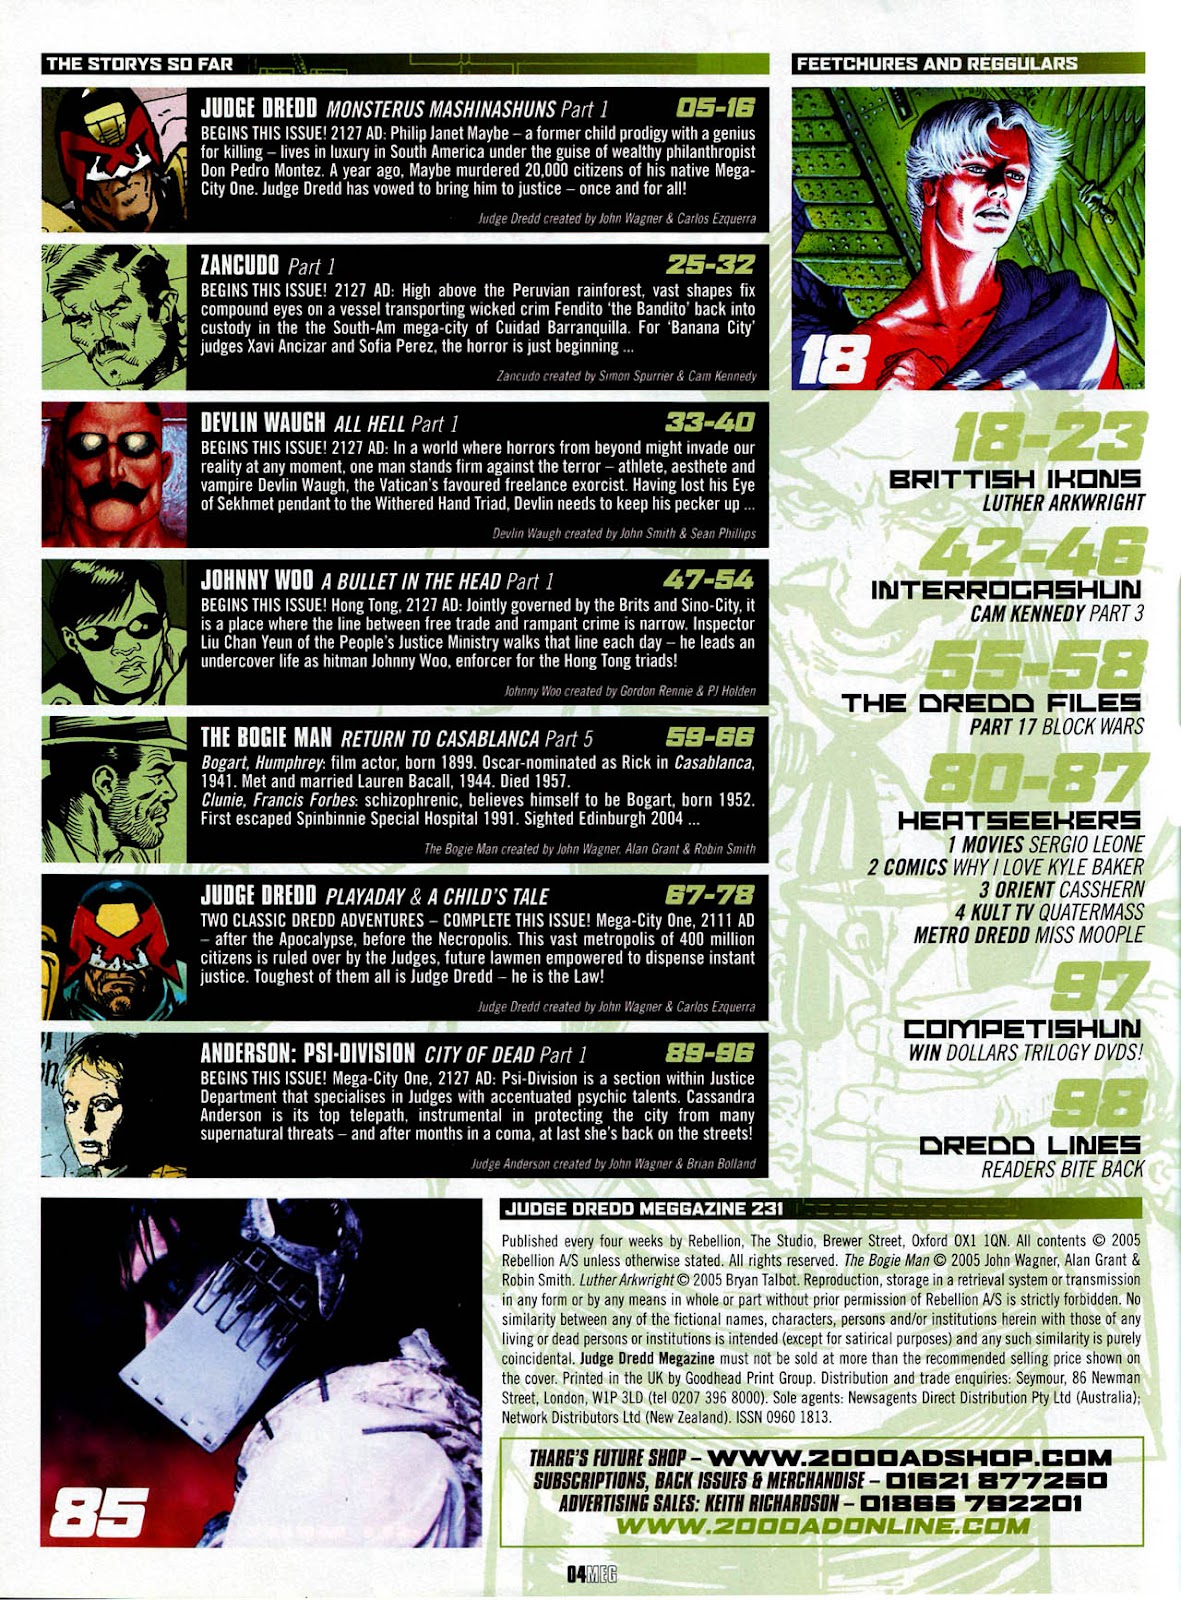 Judge Dredd Megazine (Vol. 5) issue 231 - Page 4